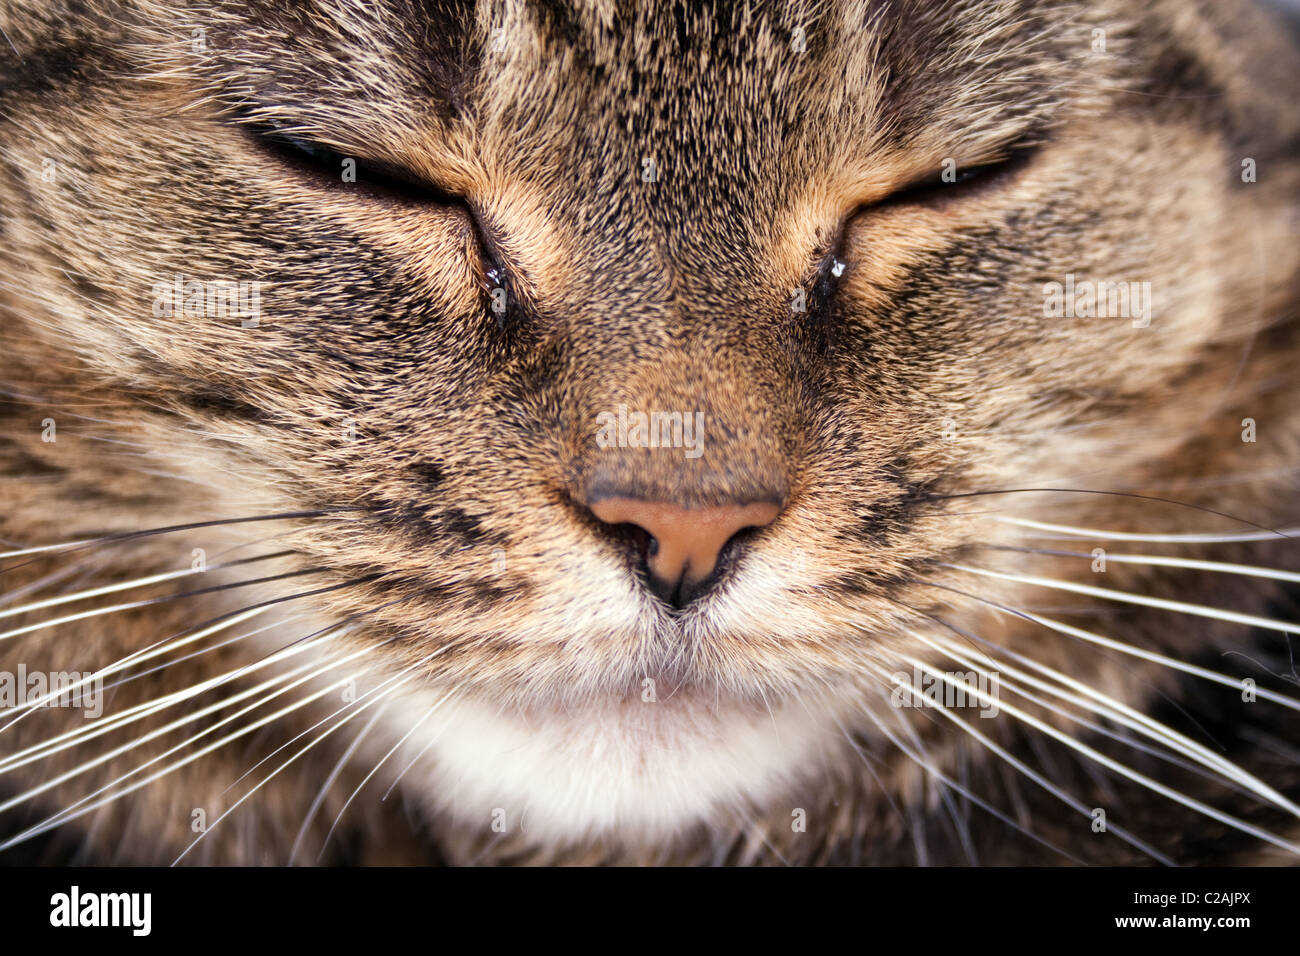 Mackerel Tabby cat close up face Stock Photo